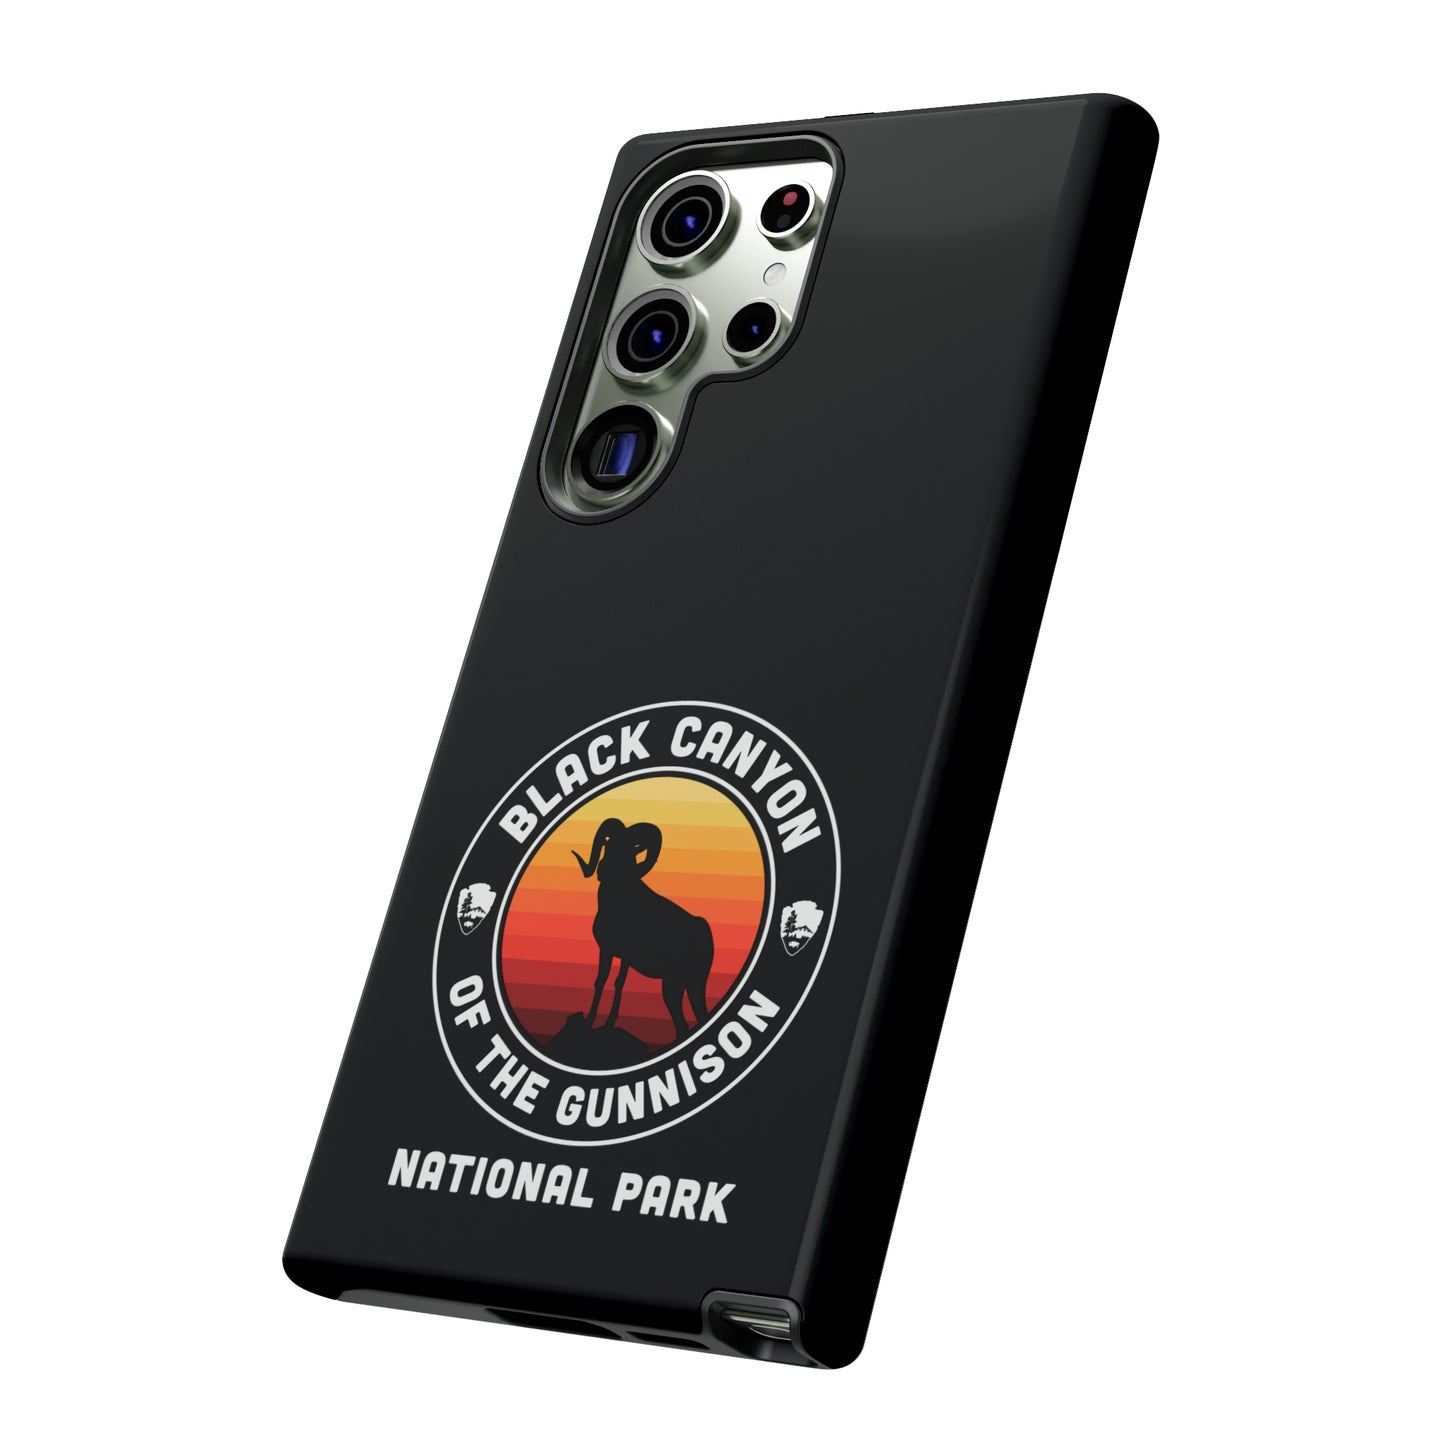 Black Canyon of the Gunnison National Park Phone Case - Round Emblem Design